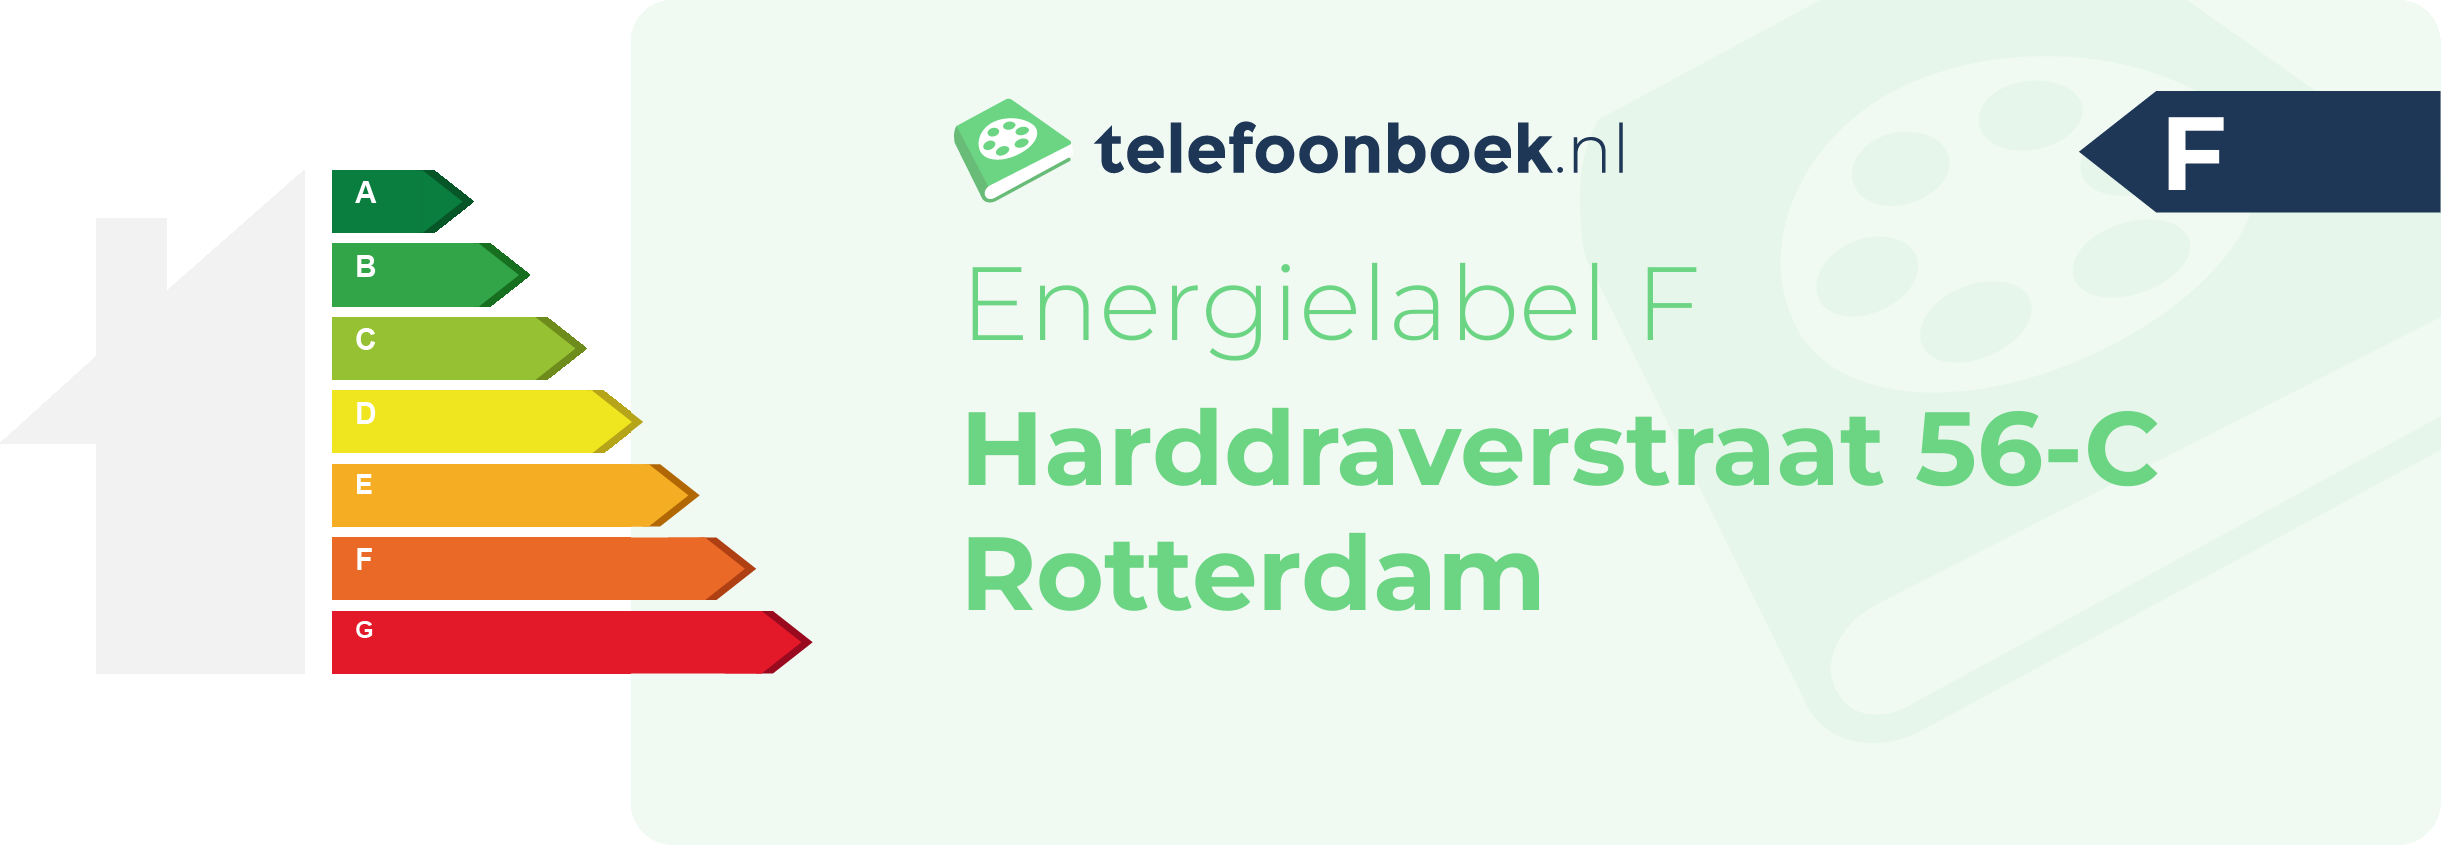 Energielabel Harddraverstraat 56-C Rotterdam